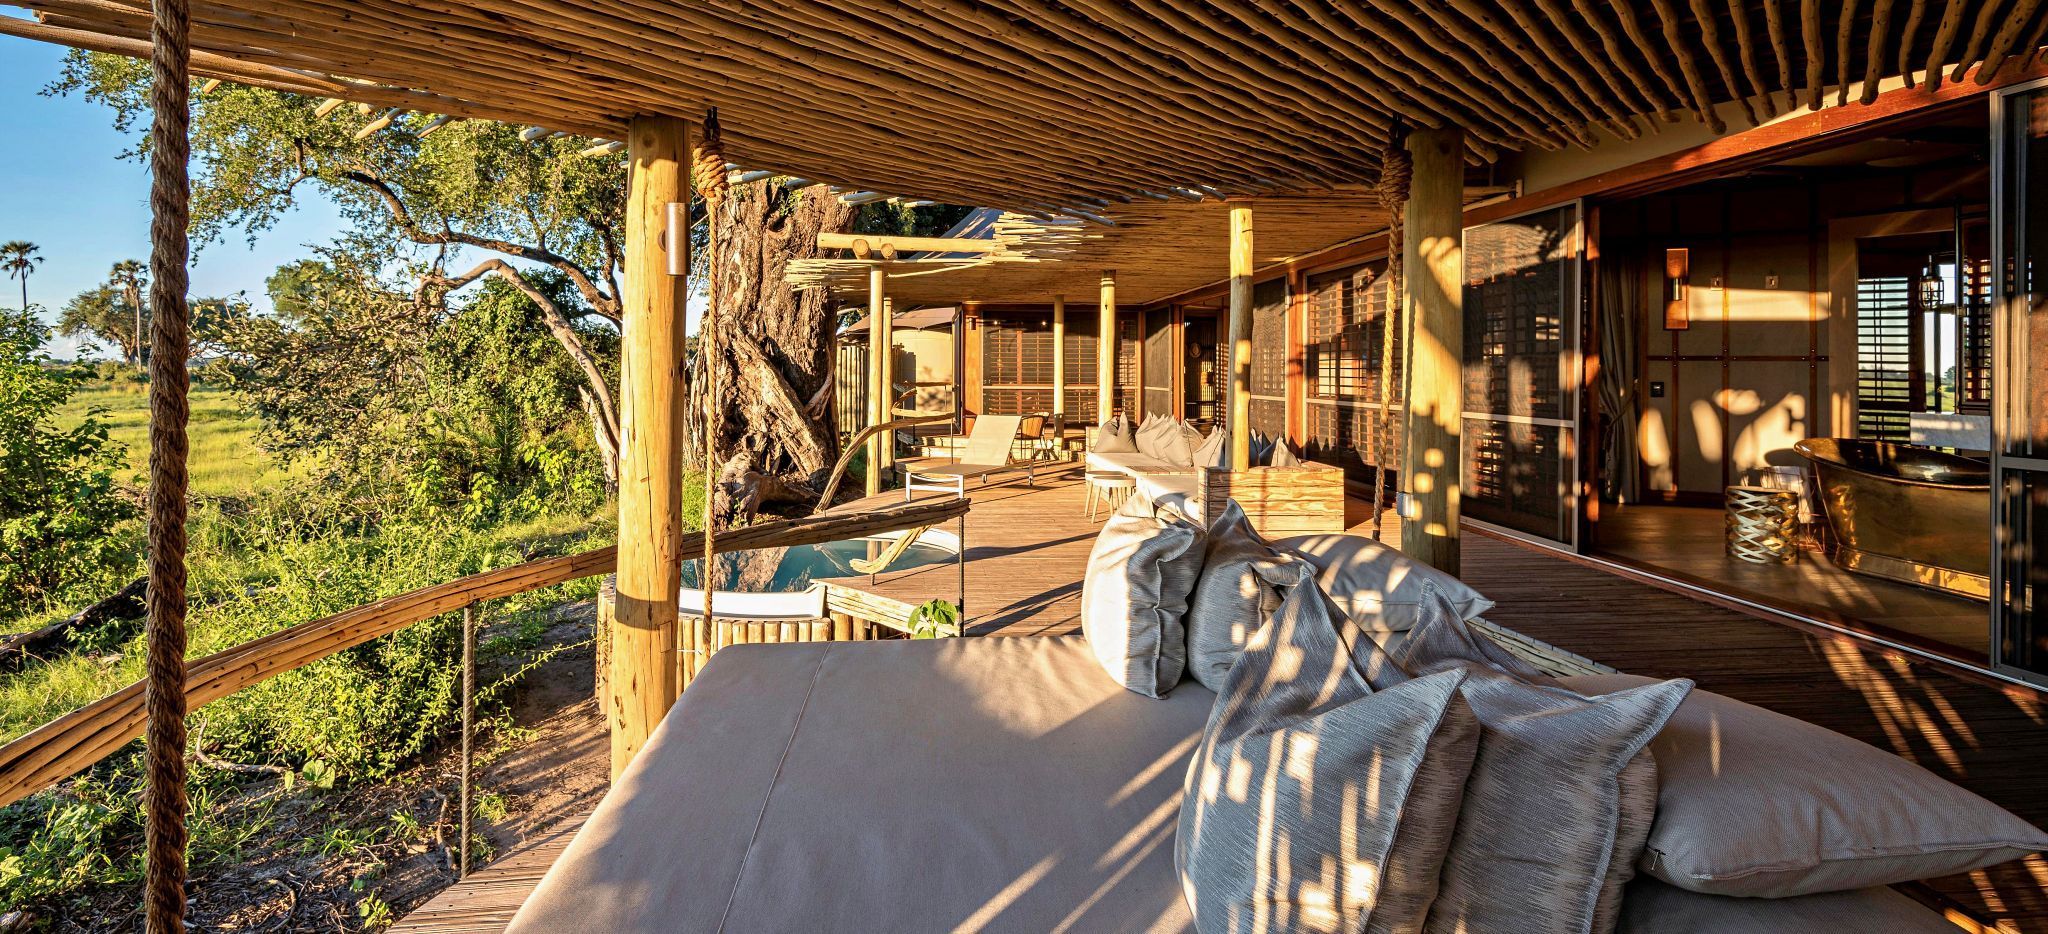 Eine Terrasse der Safari-Lodge "Little Mombo" in Botsuana